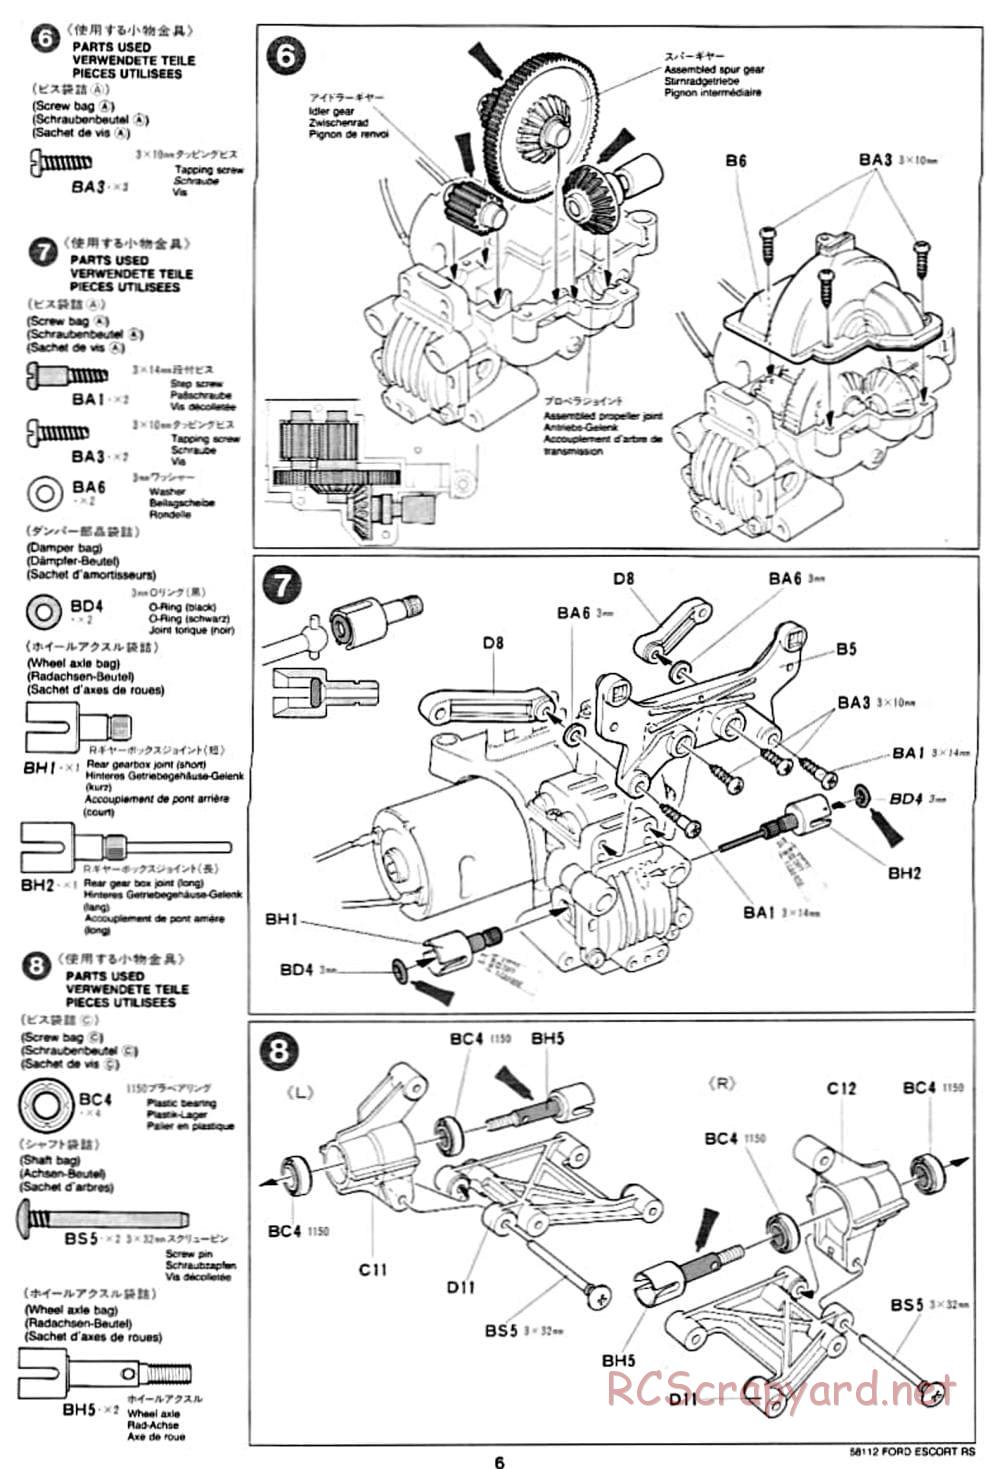 Tamiya - Ford Escort RS Cosworth - TA-01 Chassis - Manual - Page 6